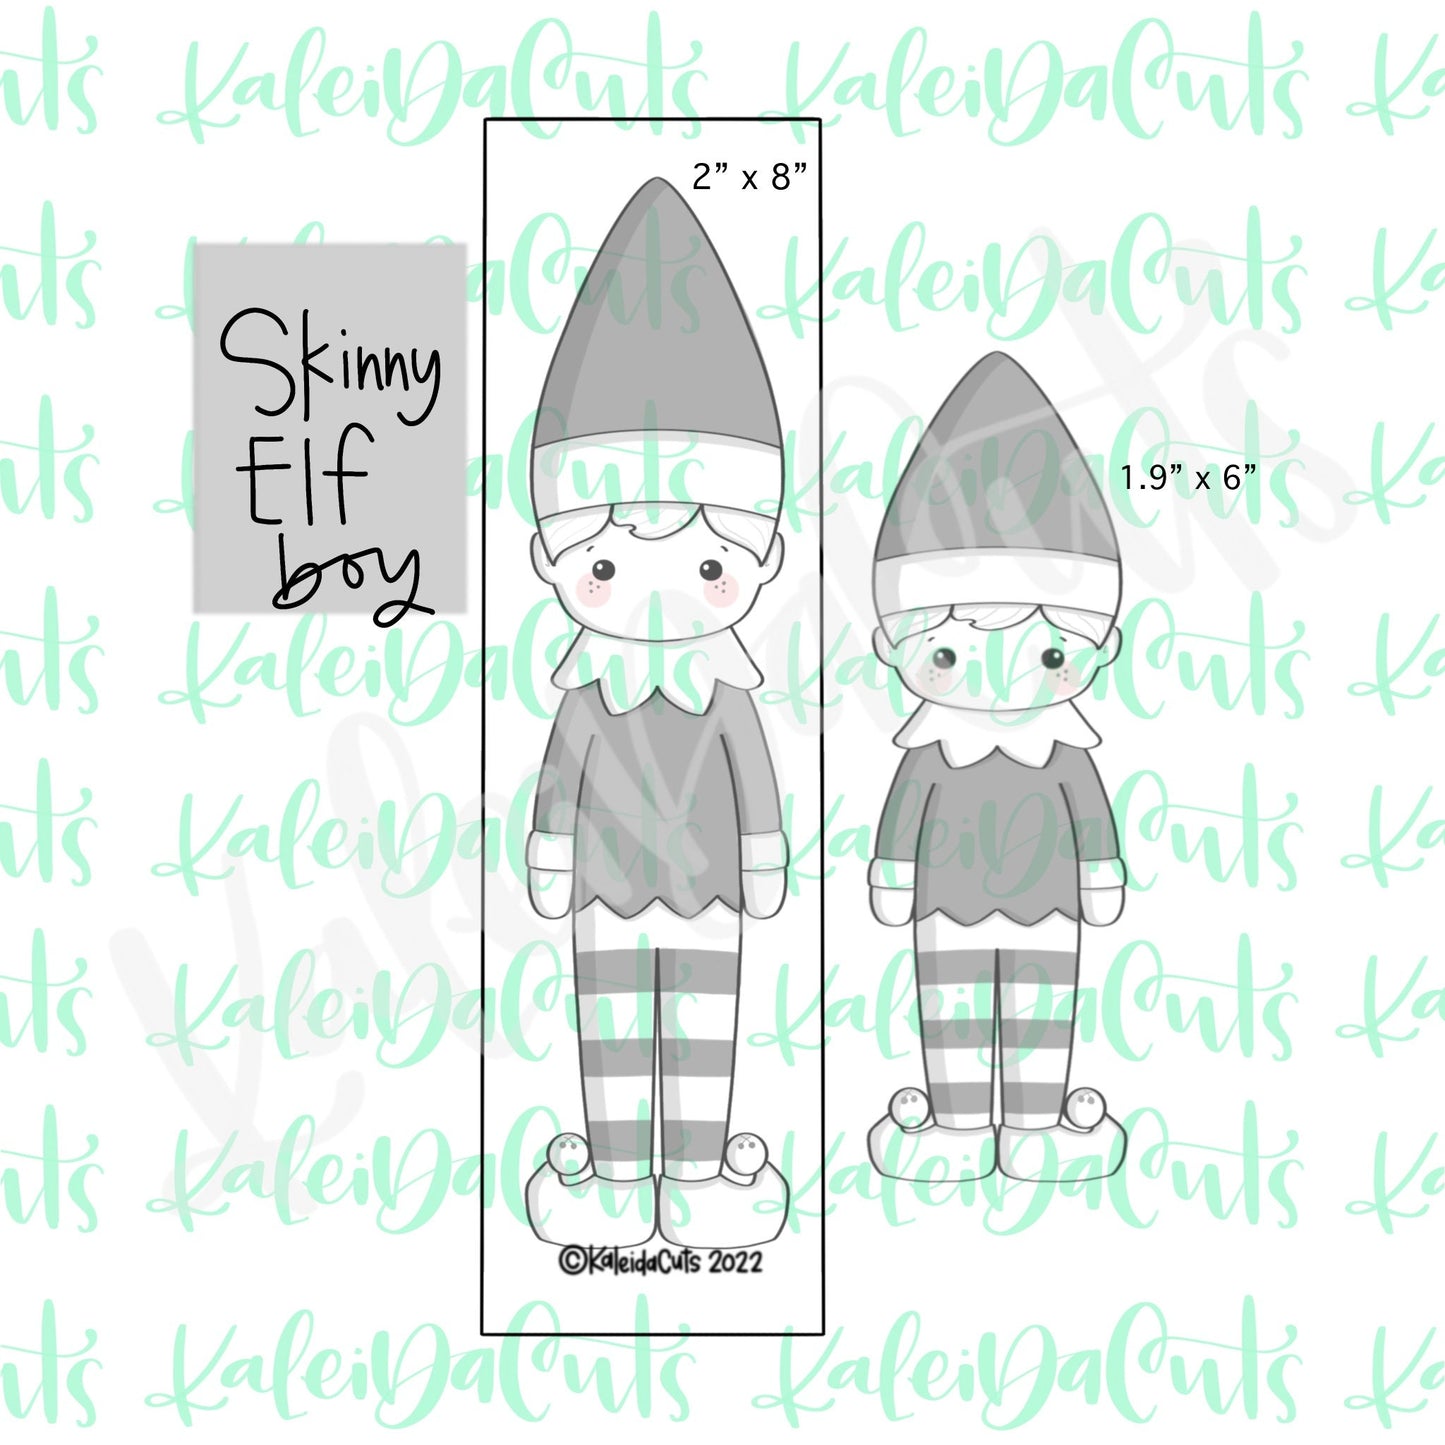 Skinny Elf Boy Cookie Cutter